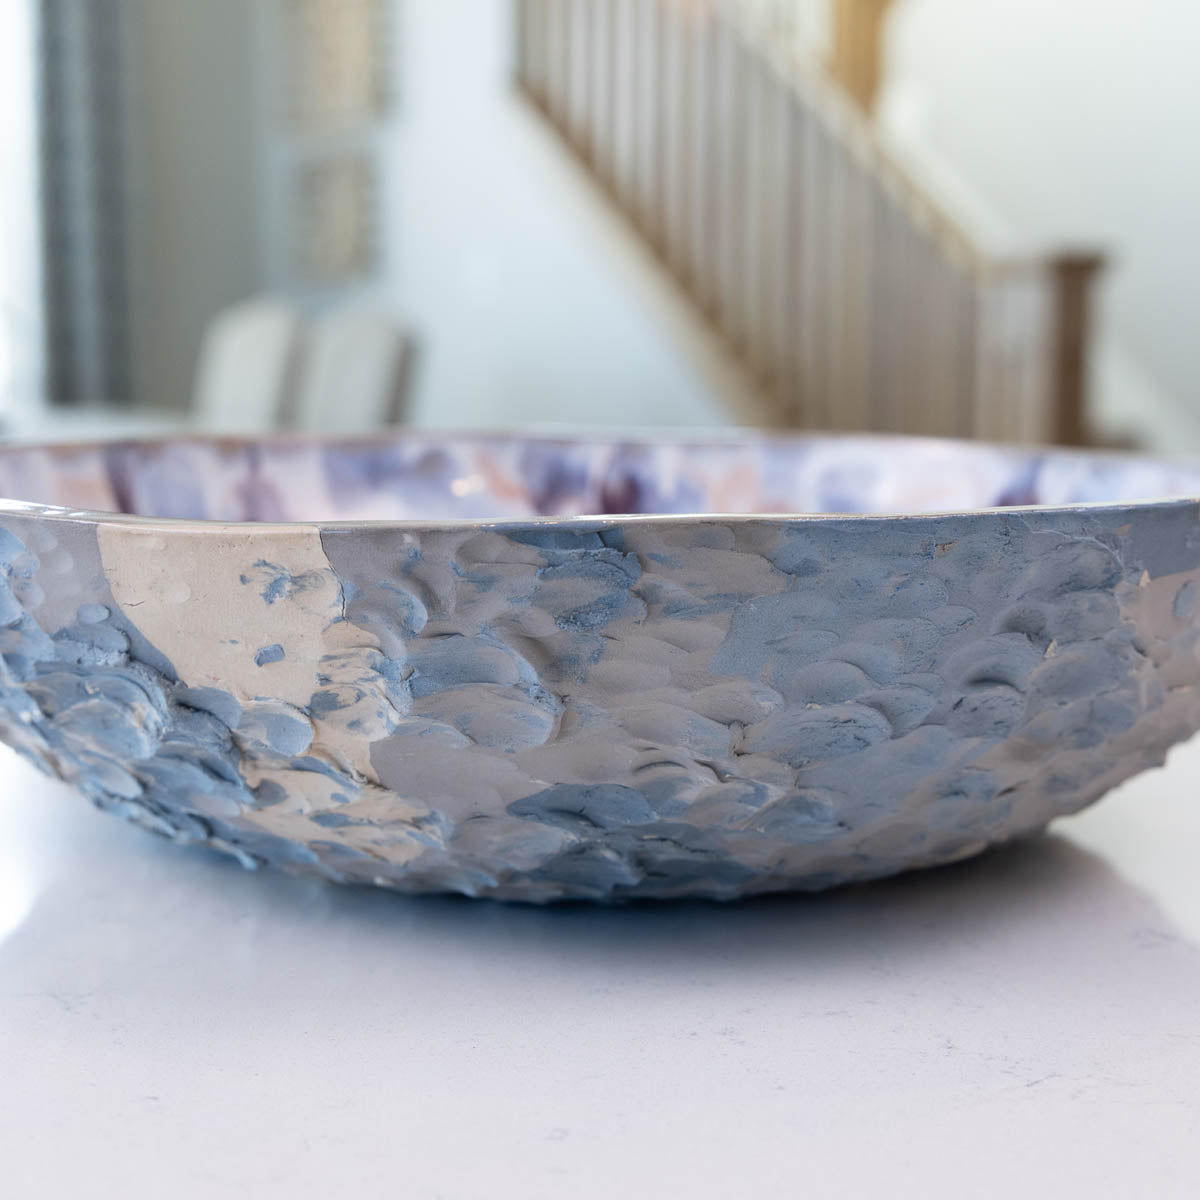 XXL Gray Stoneware Serving/Decorative Bowl Pinks, Grays, & Purples (Alchemy Collection)